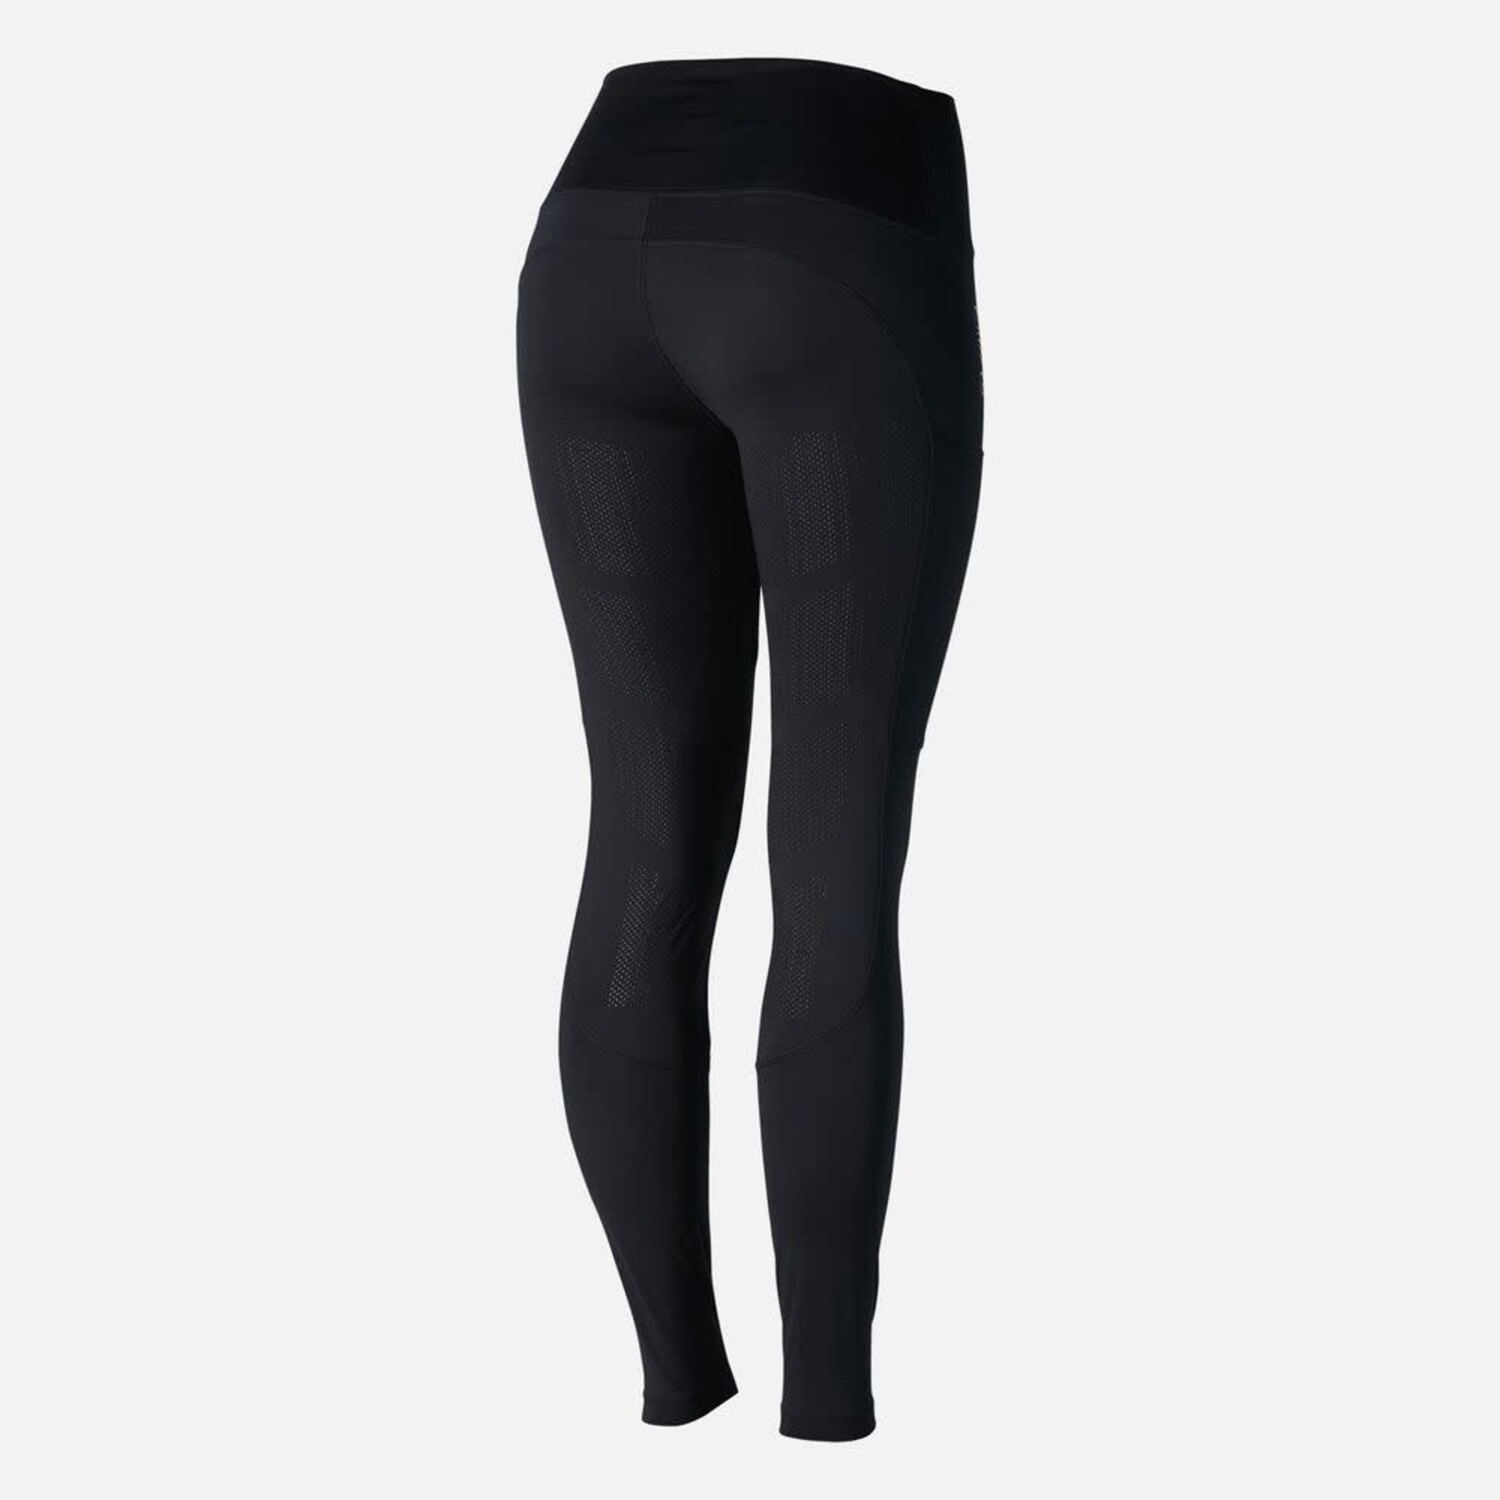 Women's black tights for winter - G4 dimension